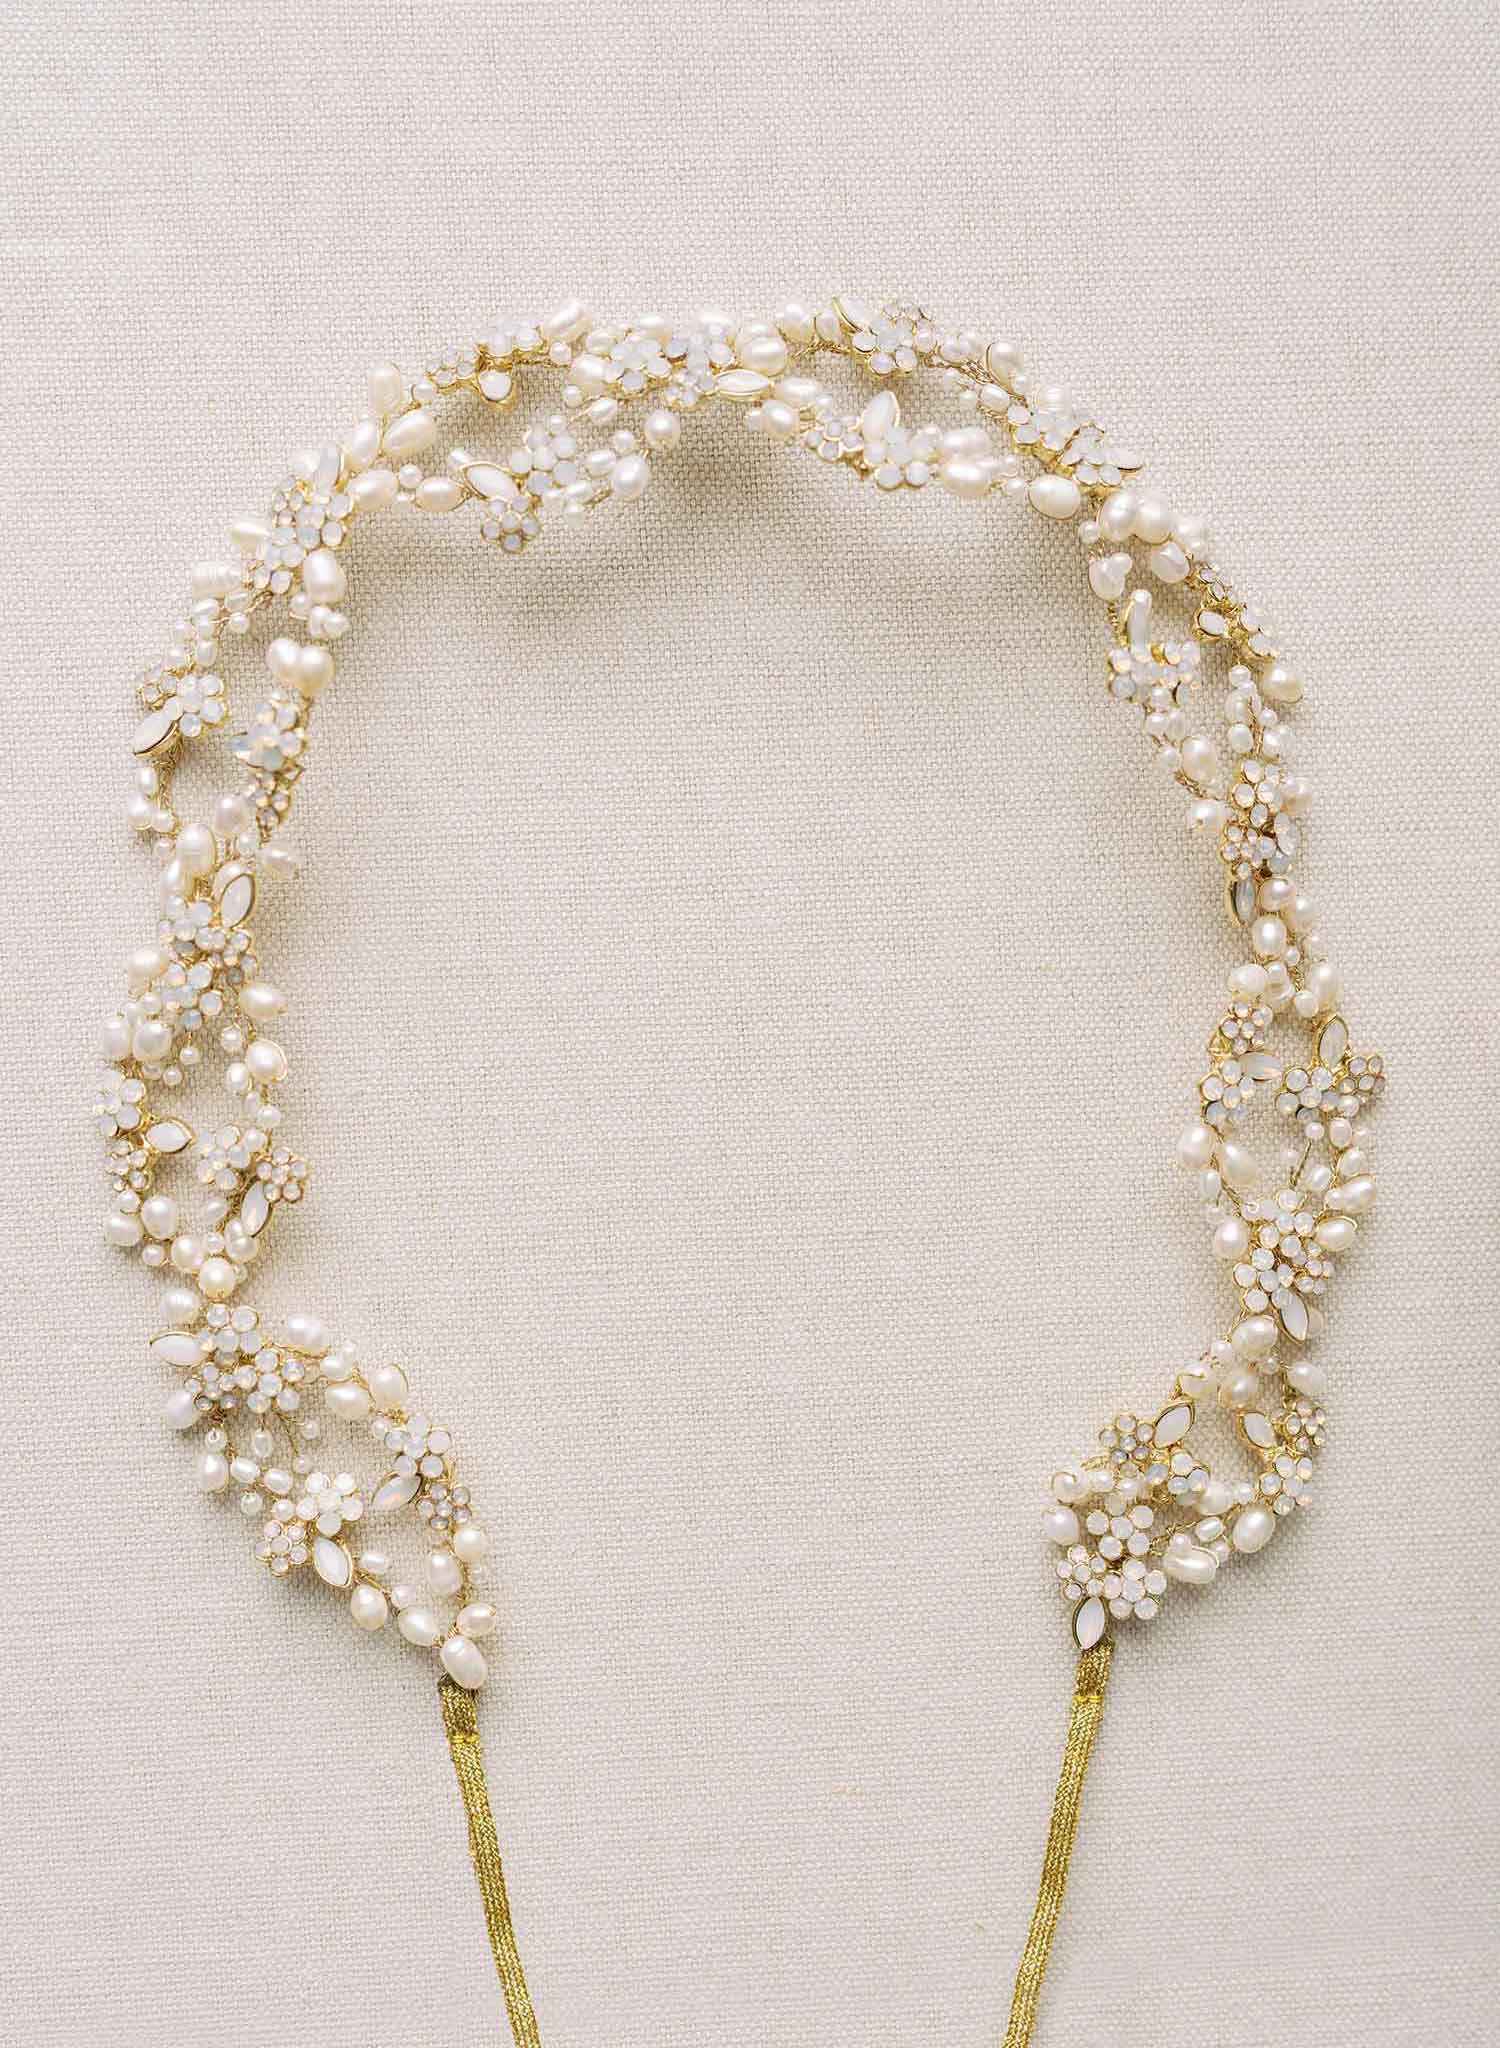 Decadent pearl infinity loops vine - Style #2131